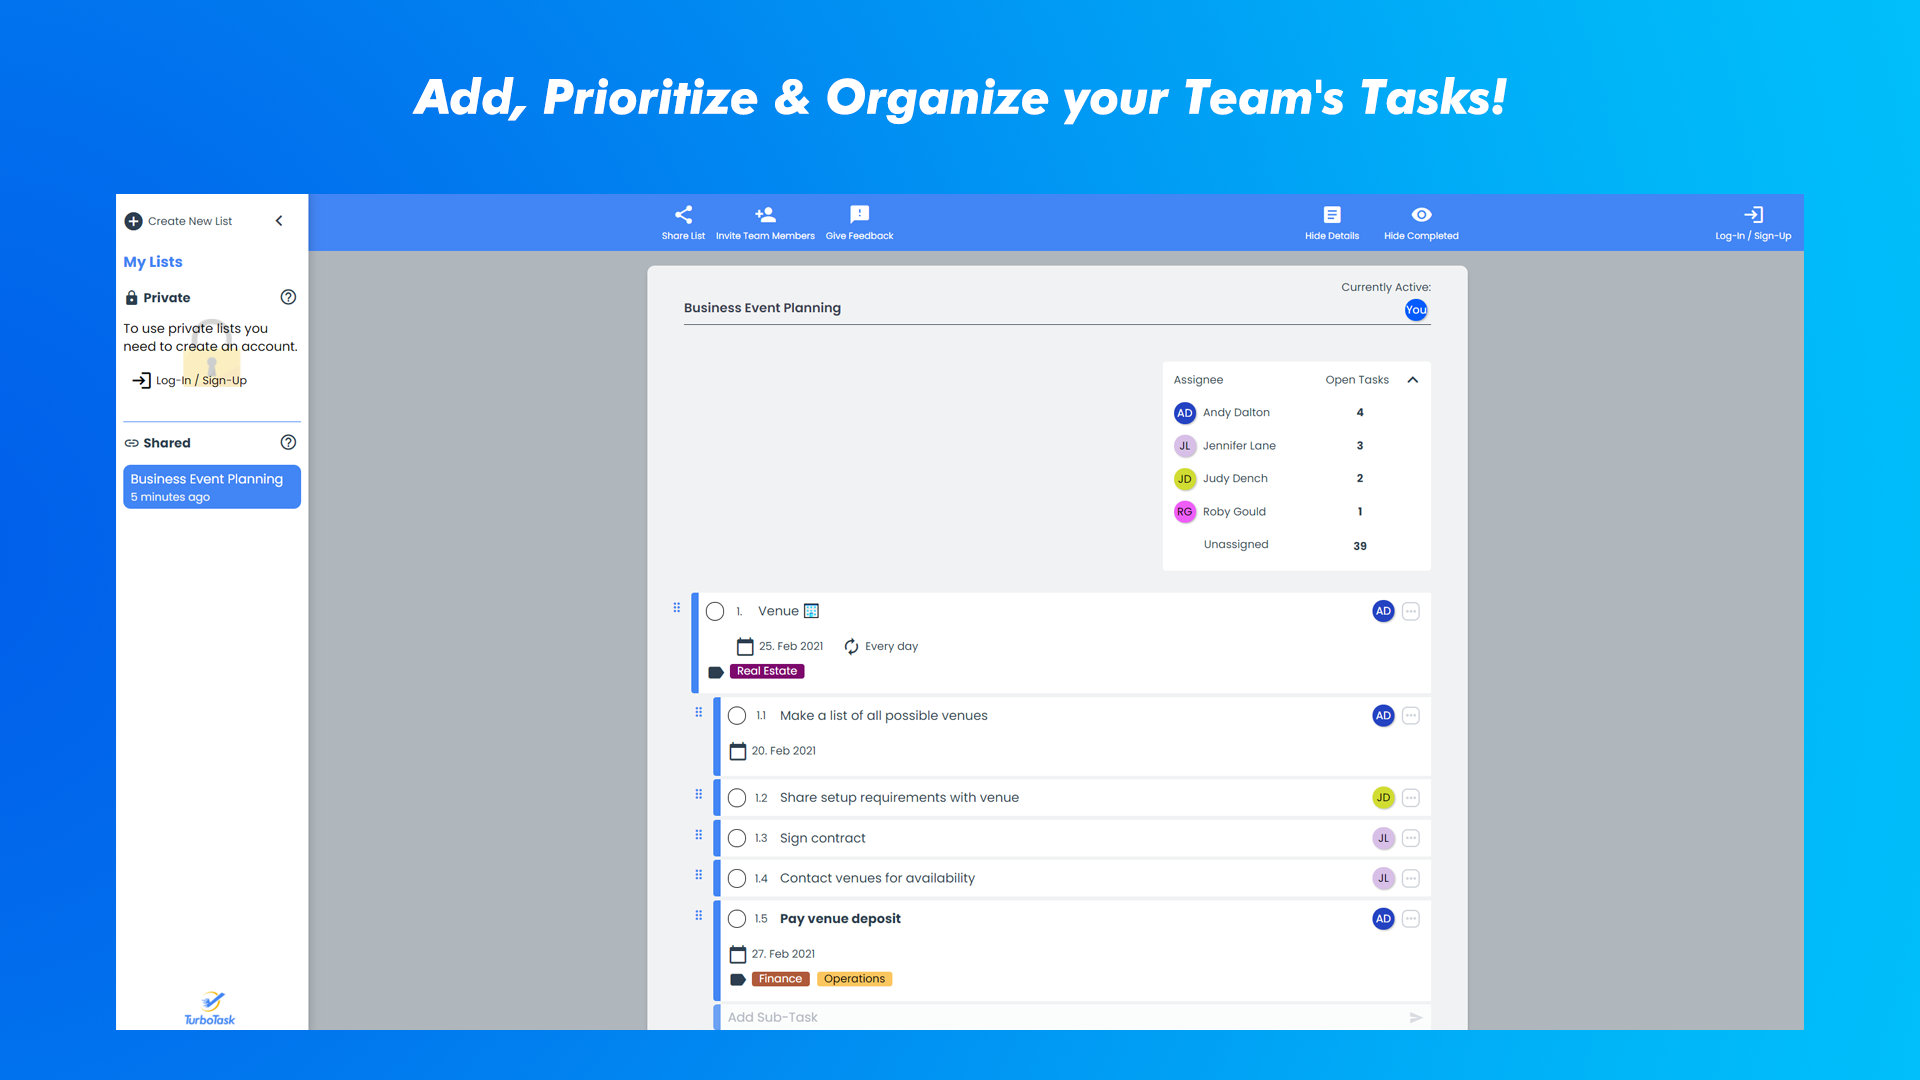 Add, Prioritize & Organize your Team's Tasks!